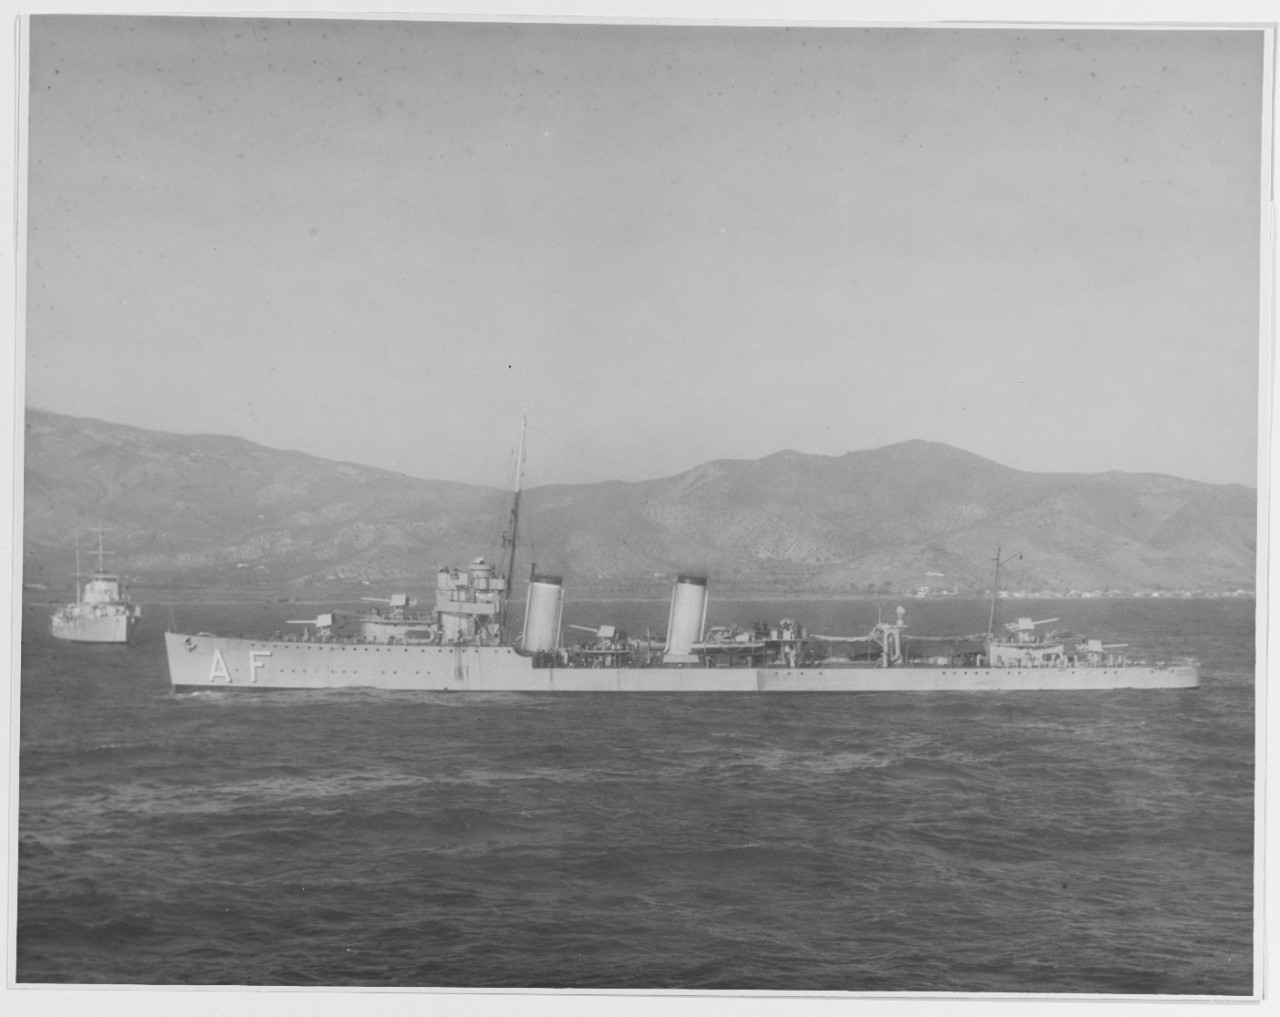 ALMIRANTE JUAN FERRANDIZ (Spanish destroyer, 1928)